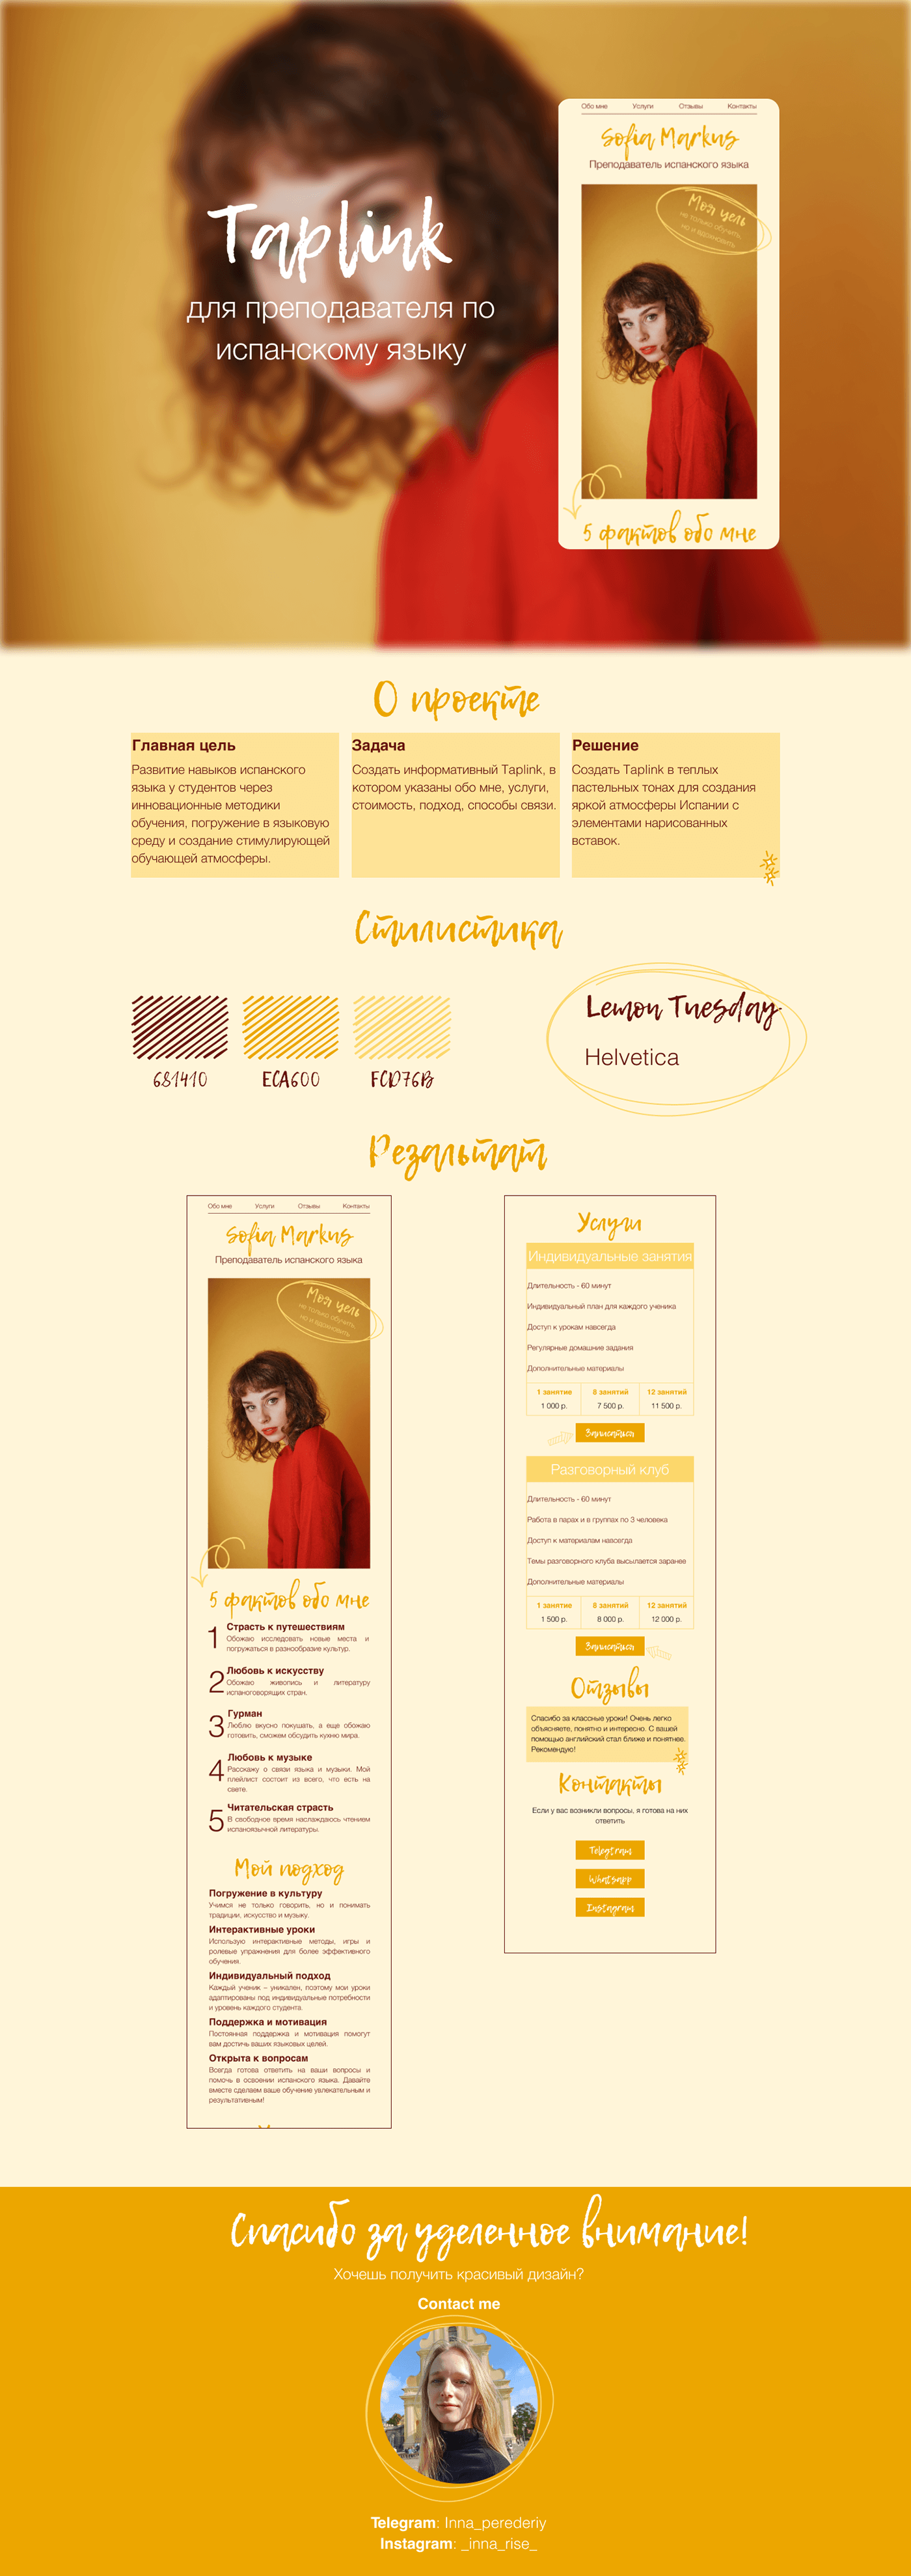 Taplink design Web Design  landing page таплинк дизайн Репетитор фигма испания spain